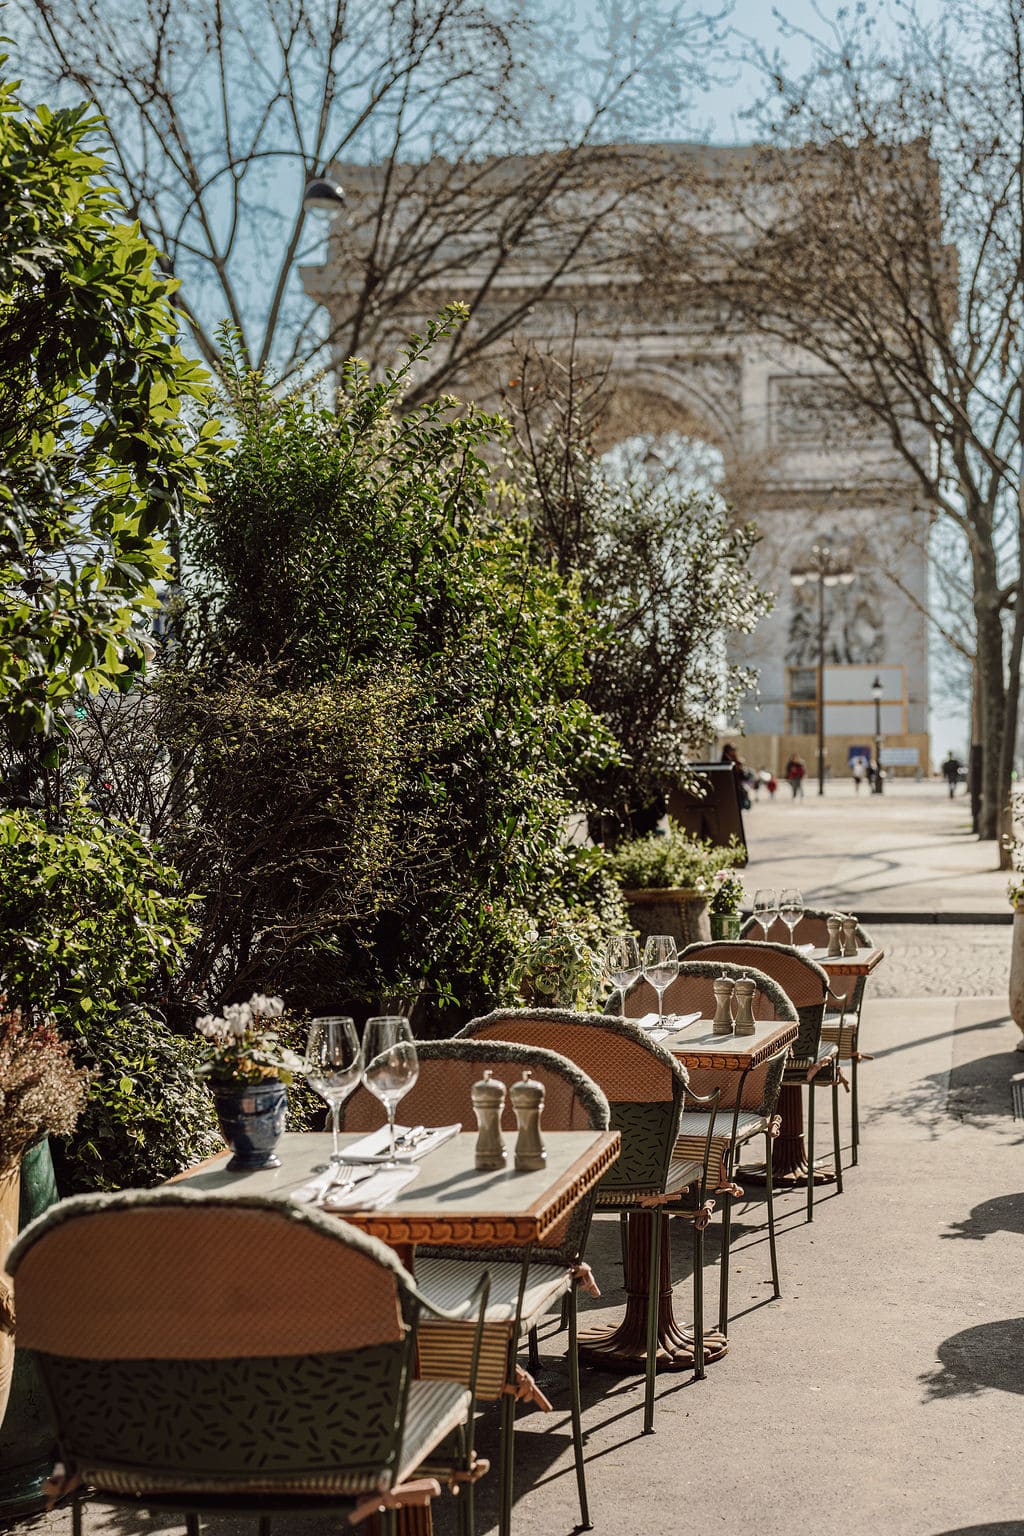 Spend a pleasant moment in a restaurant charles de gaulle étoile, known for its brunch paris 16